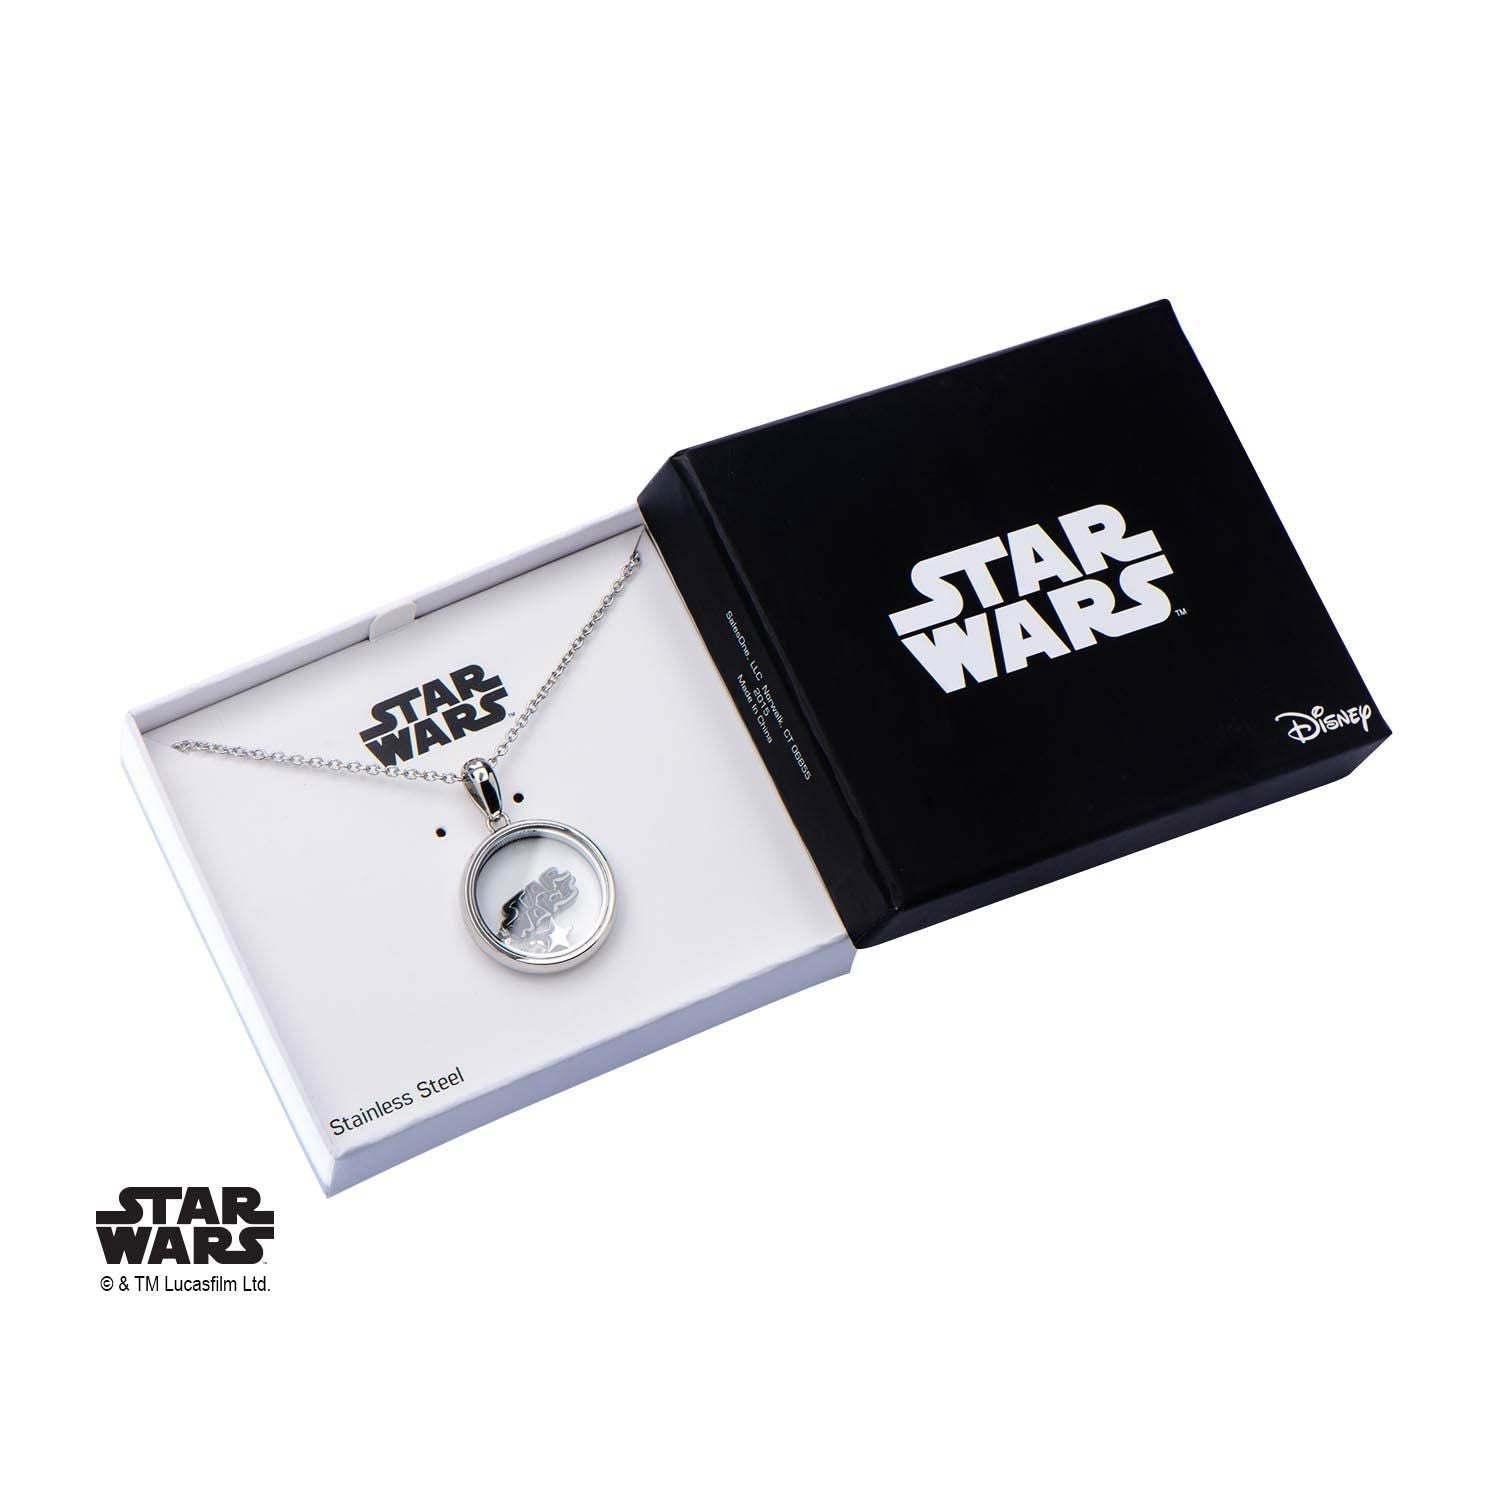 STAR WARS Star Wars Logo Beads Pendant Necklace -Rebel Bod-RebelBod